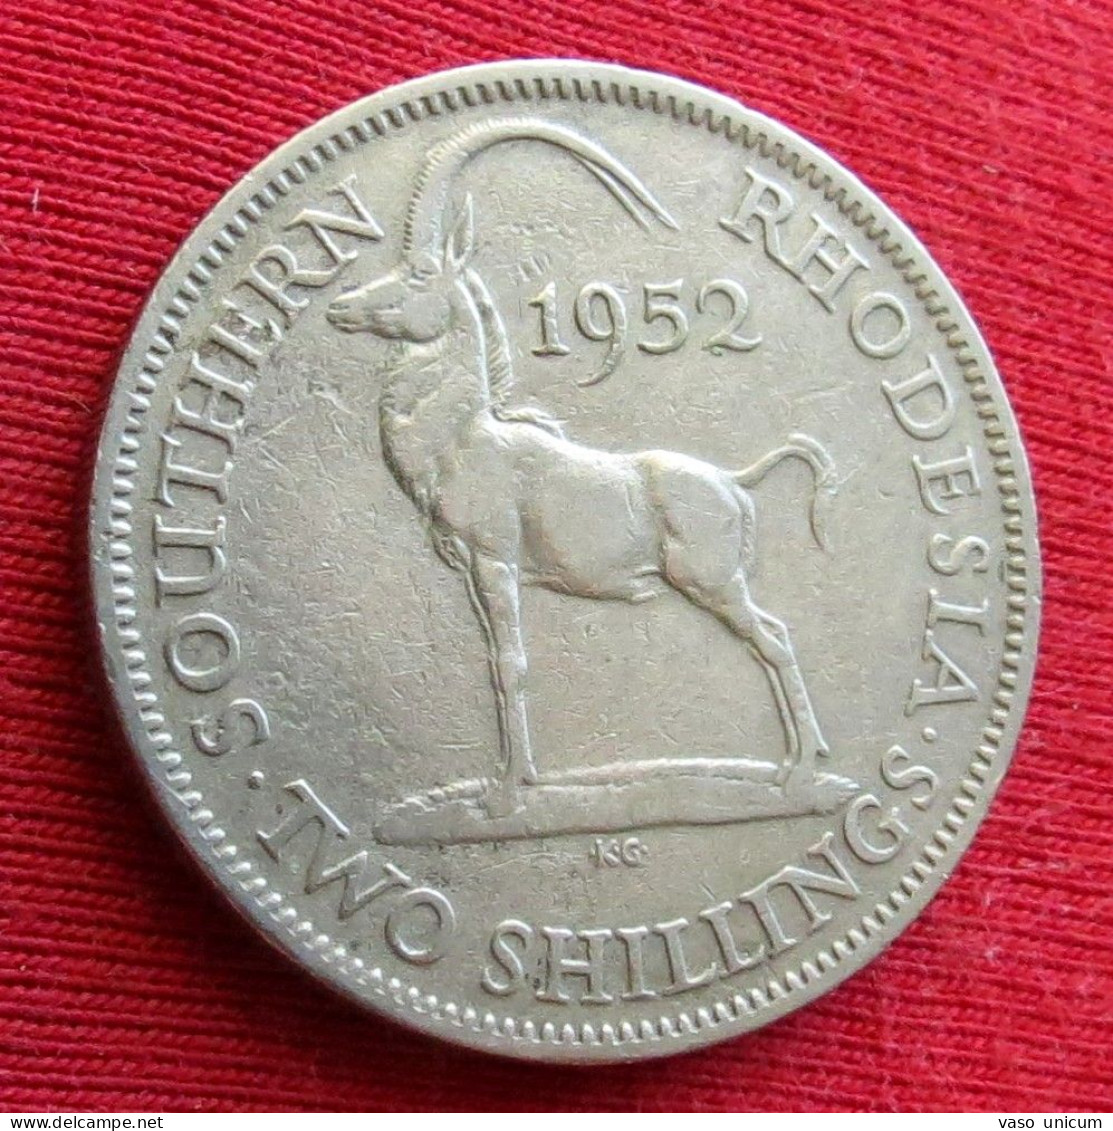 South Rhodesia 2 Shilling 1952 - Rhodesia